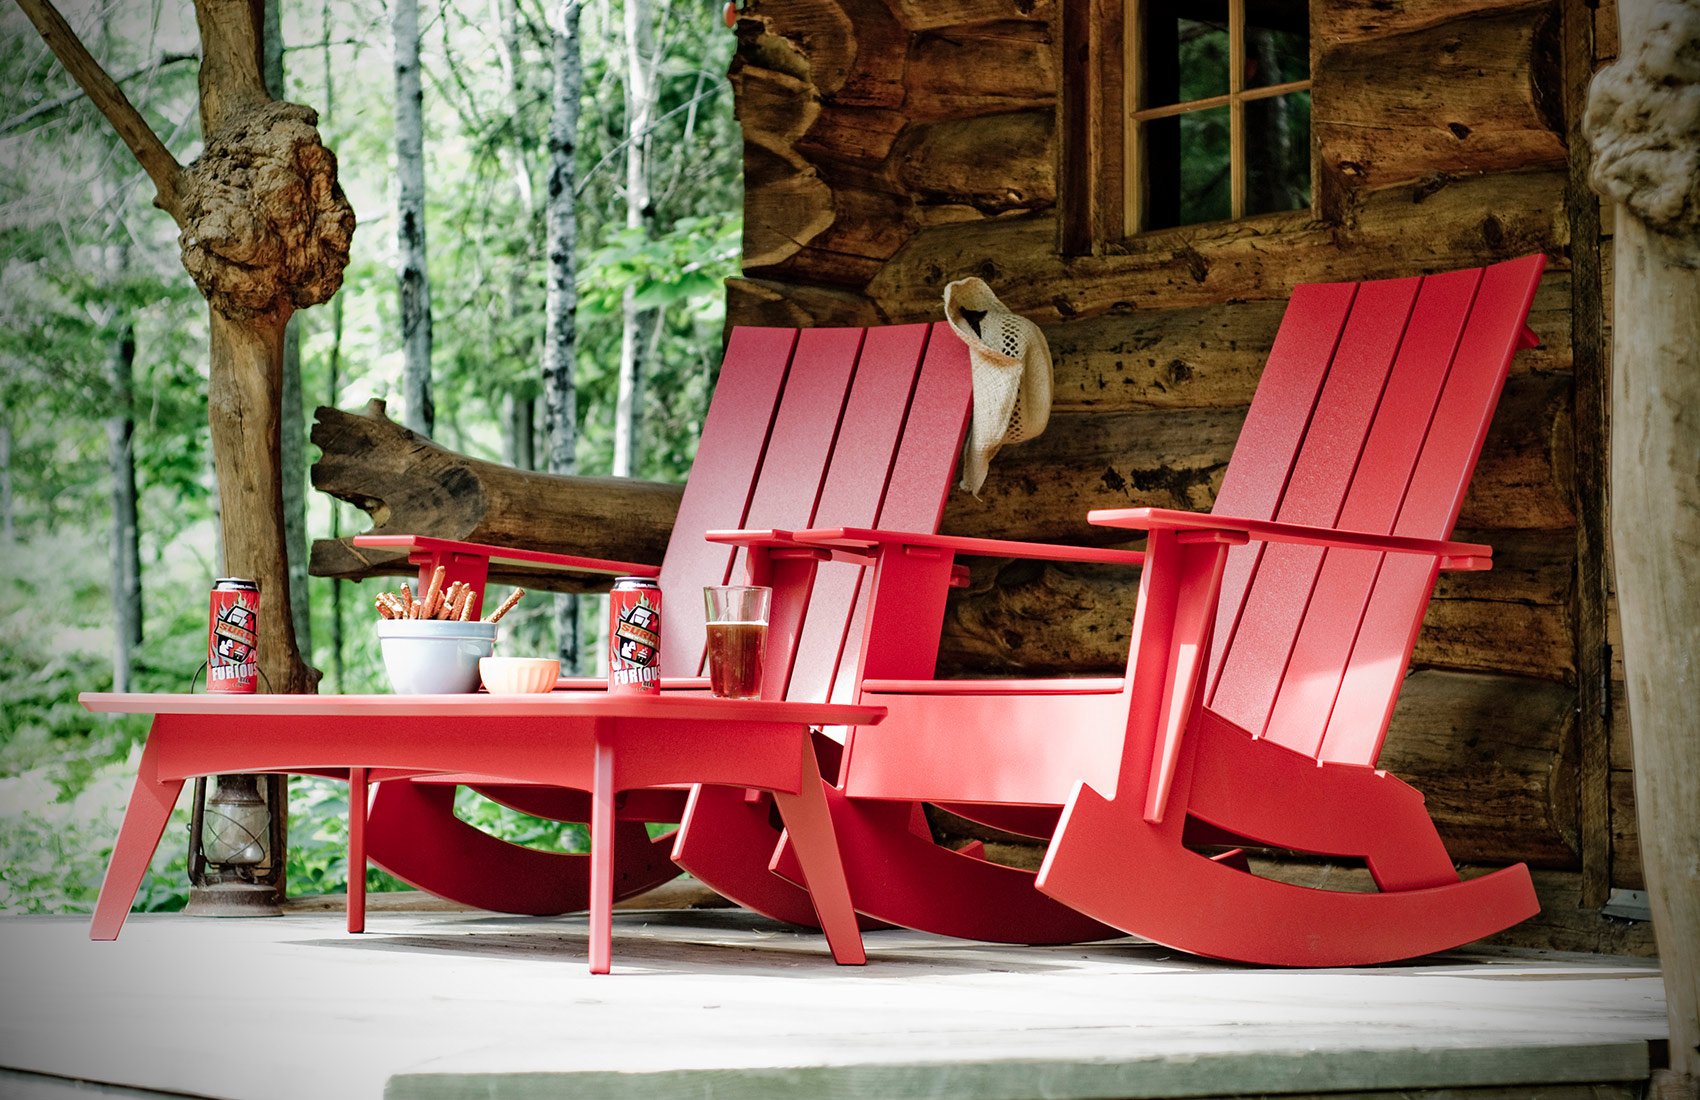 Rocking Adirondack Chair (Flat)